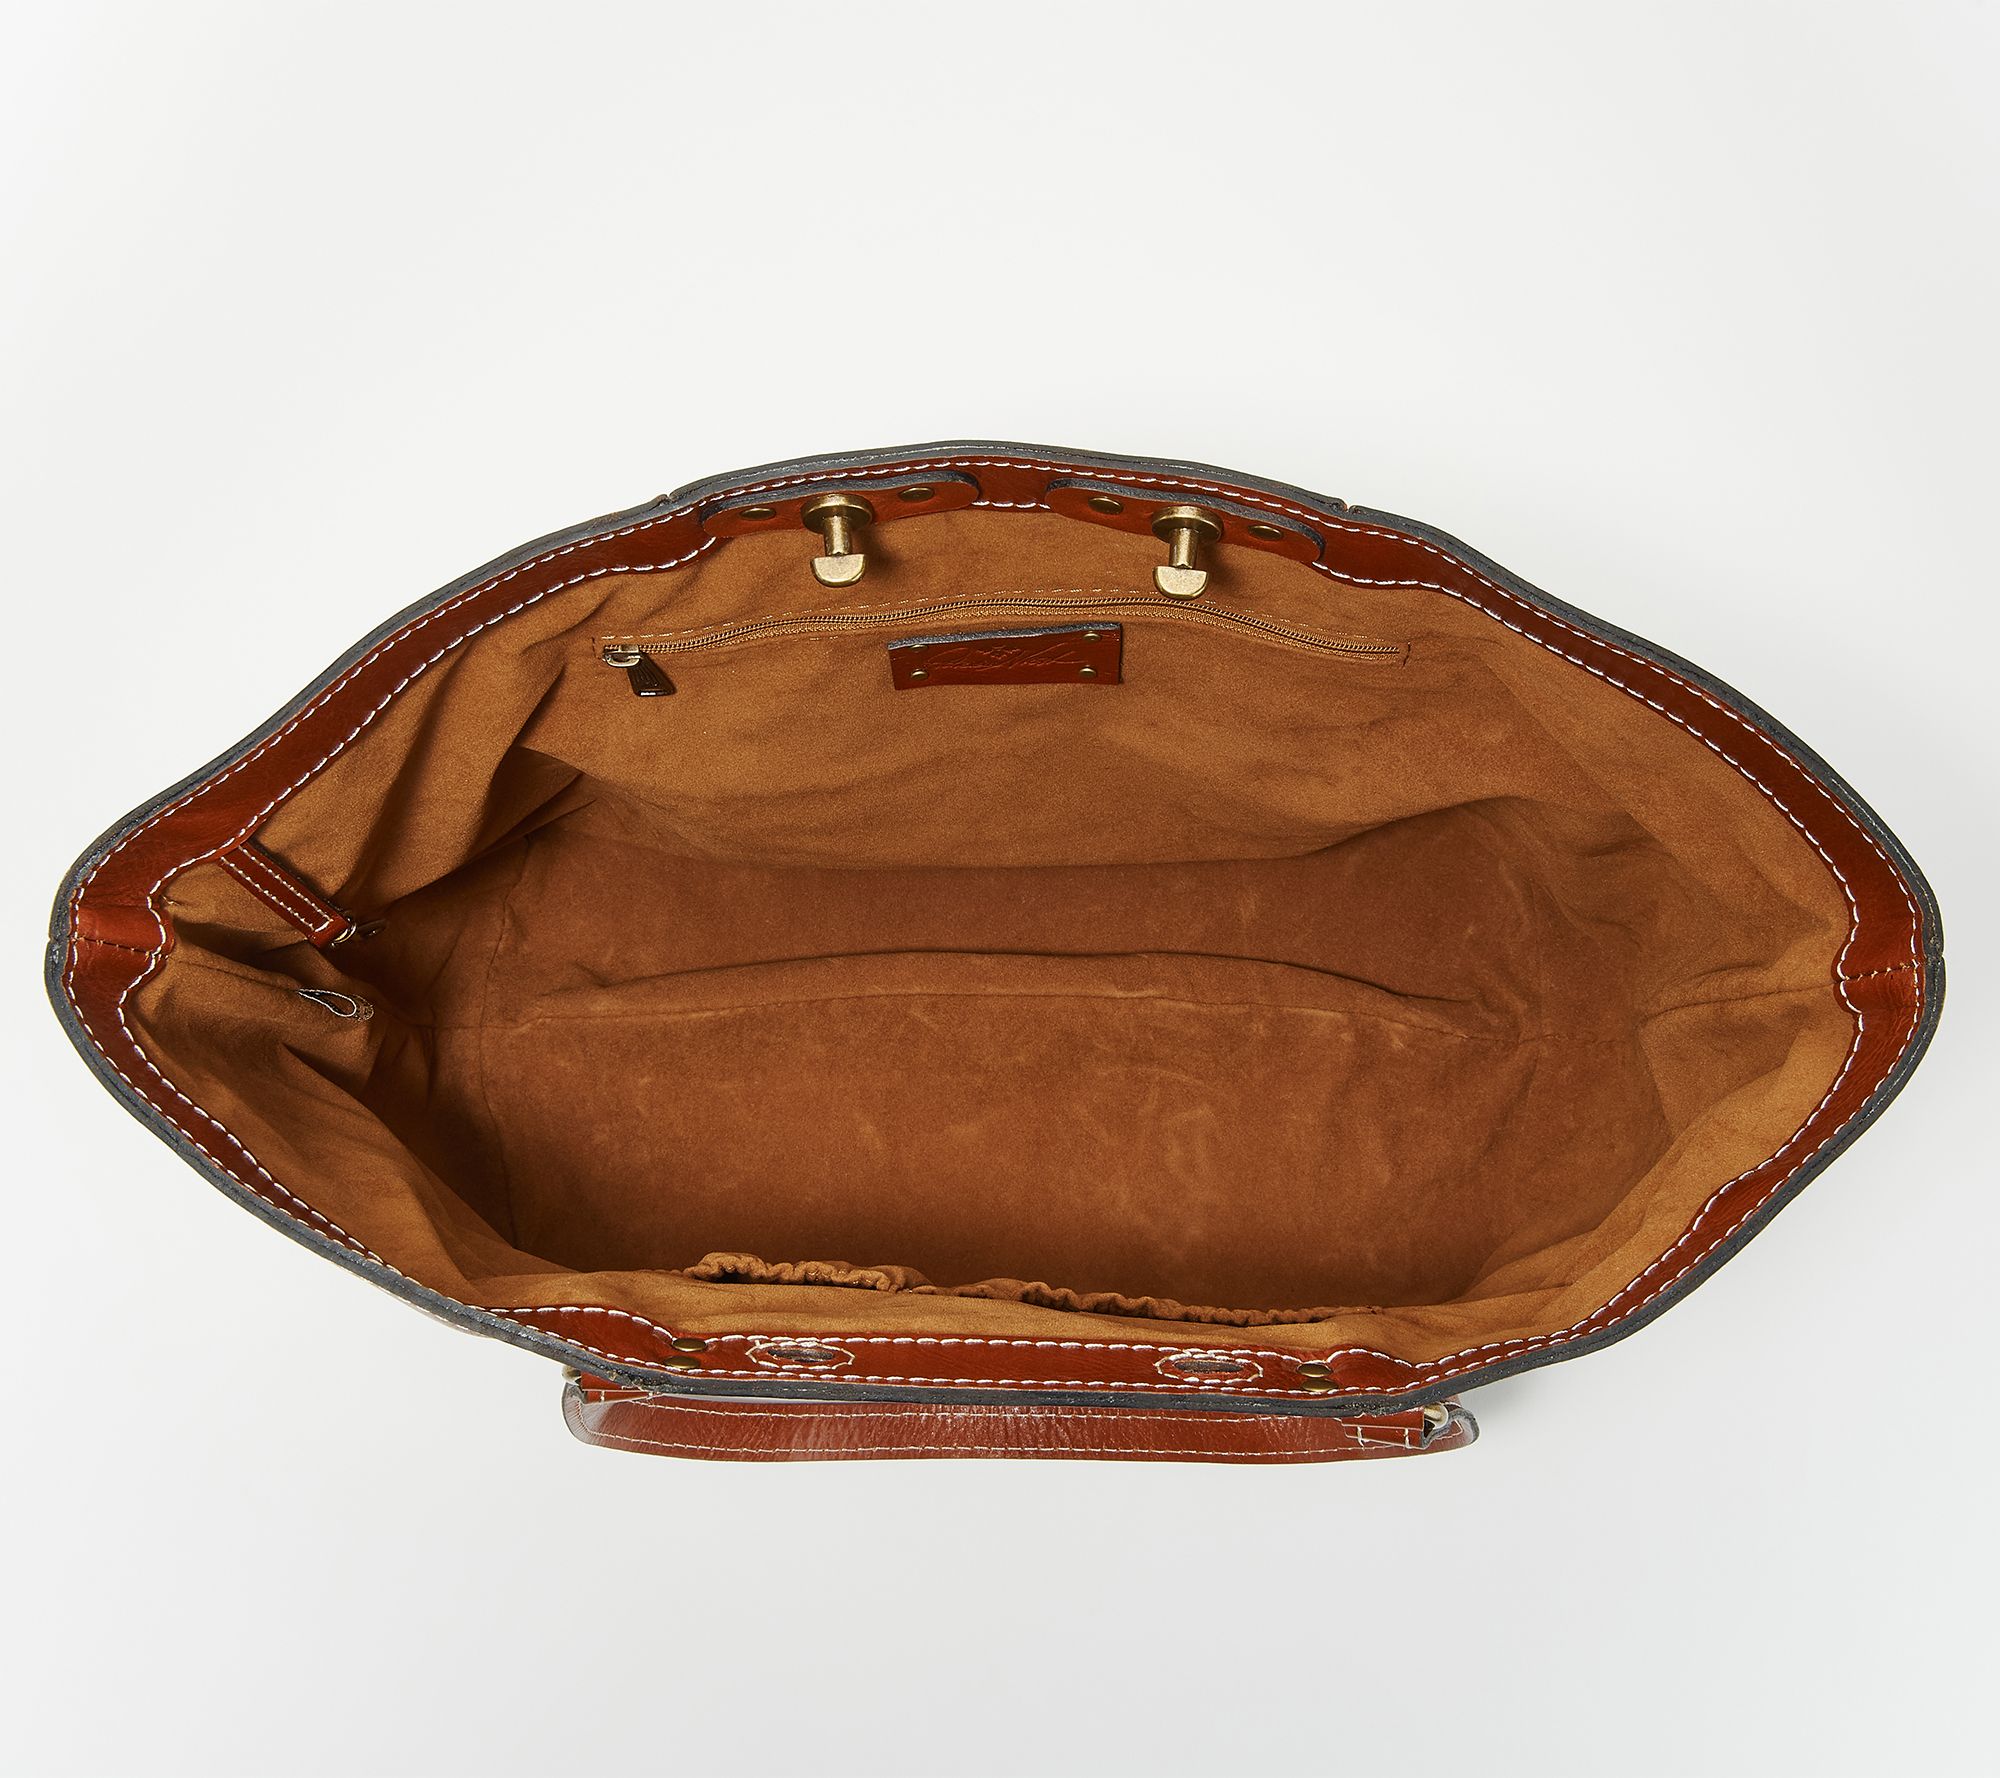 NWT Old Trend Heat Wine Zip Around Wallet Cognac Stud Leather Womens Clutch Bag 